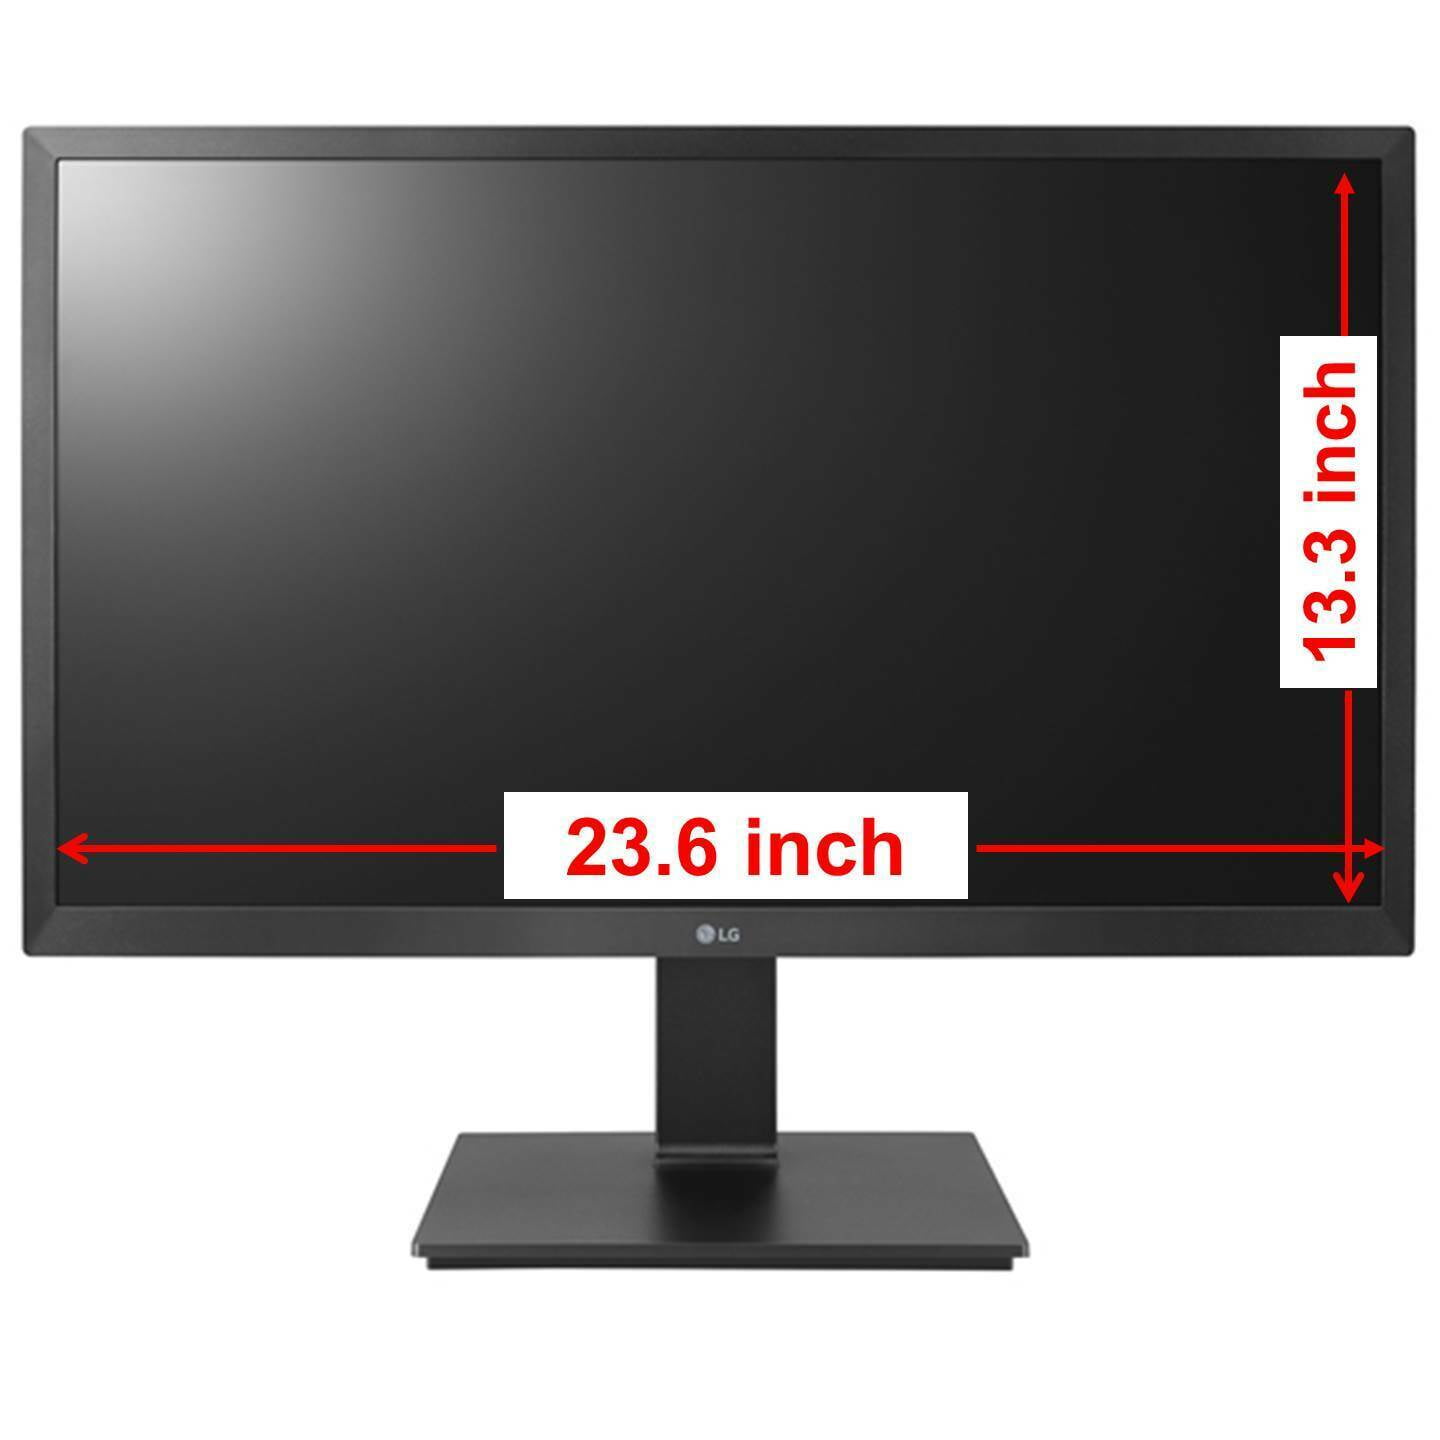 BenQ upscreen Anti Glare Screen Protector for BenQ G2225HD Reflection Shield Matte 4059181132464 